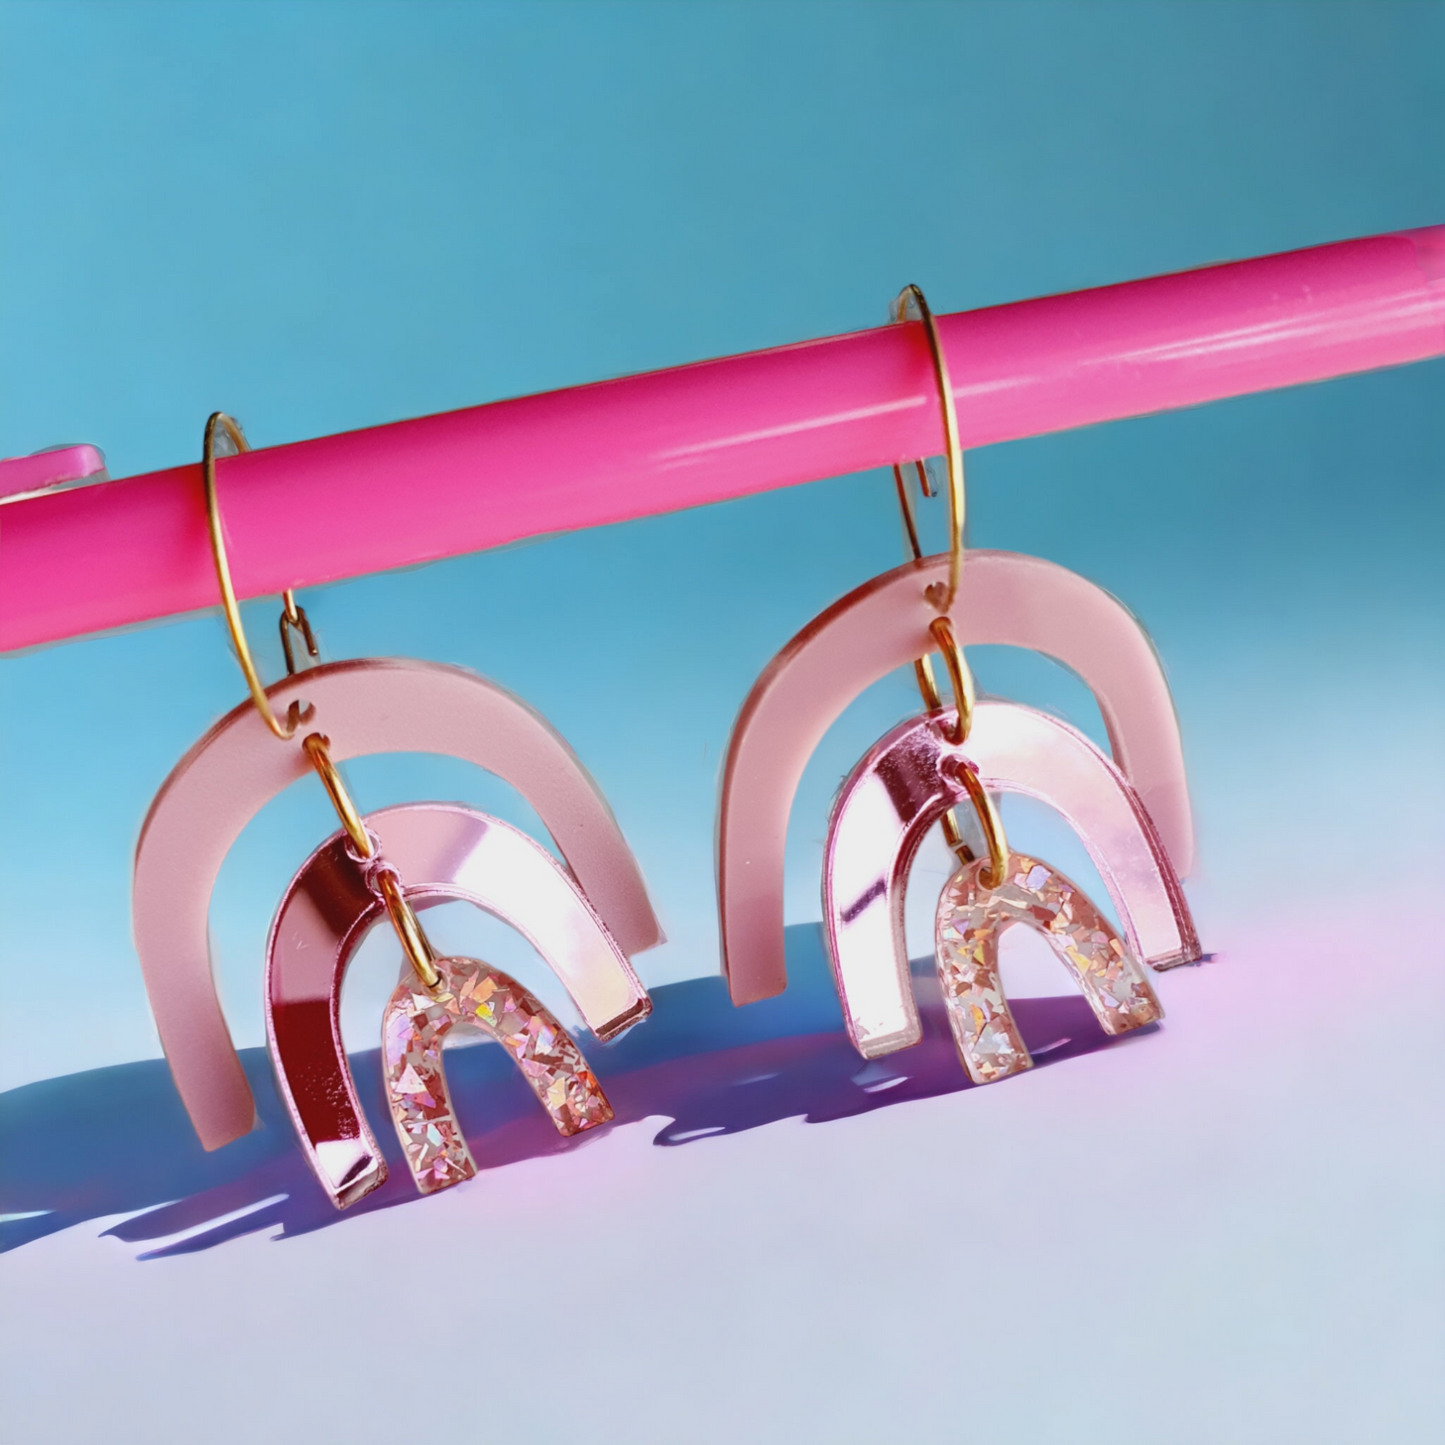 Rainbow Acrylic Earrings "Pink Lemonade" Dangle Earrings - PeppaTree Design Store